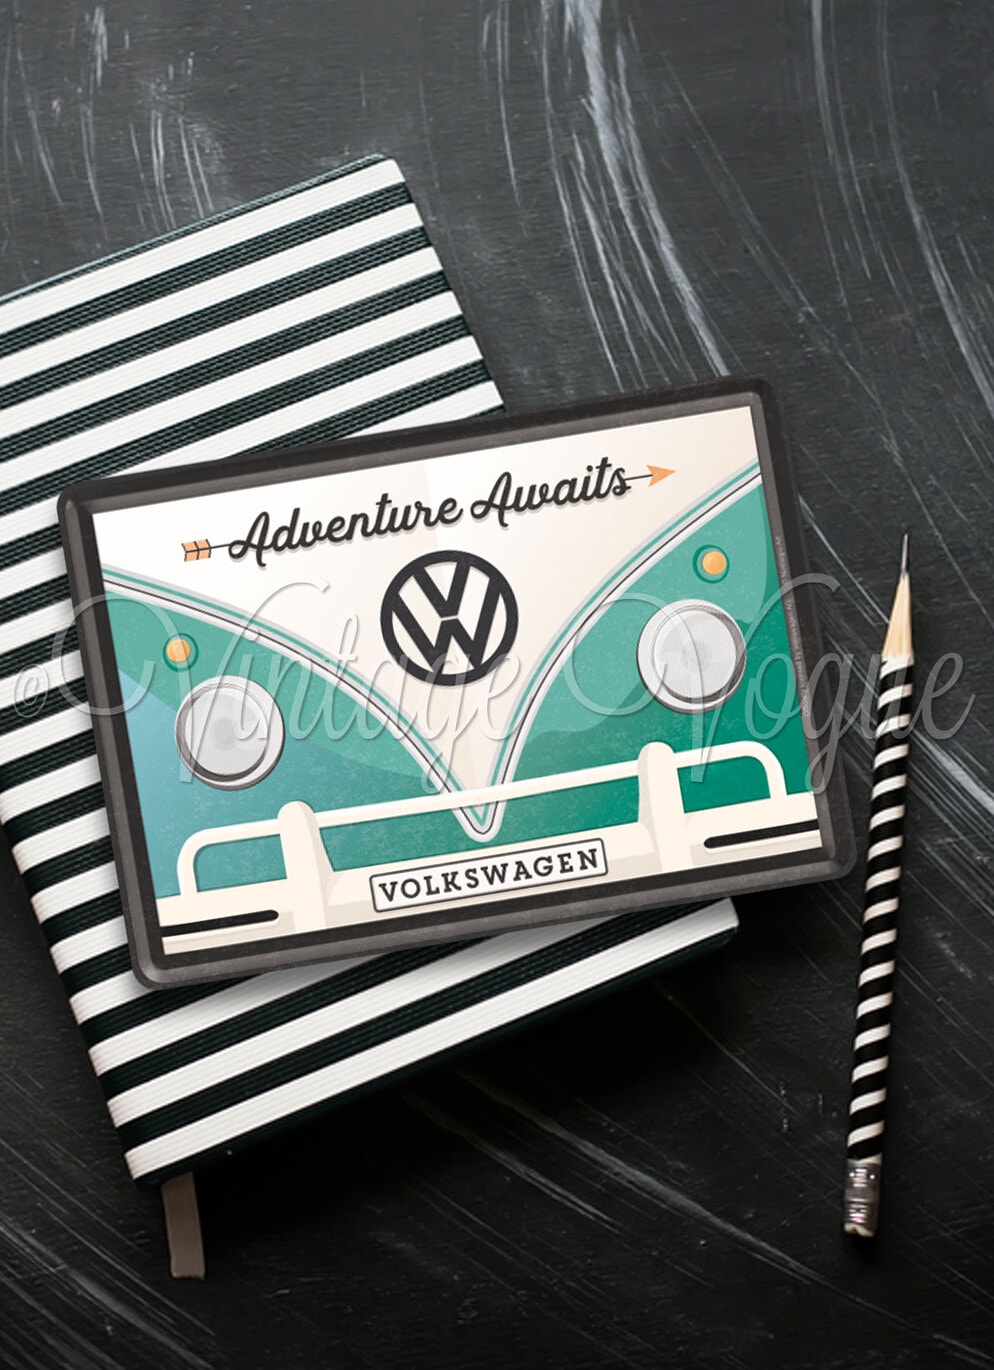 Nostalgic Art Retro Blechpostkarte VW-Adventure Awaits